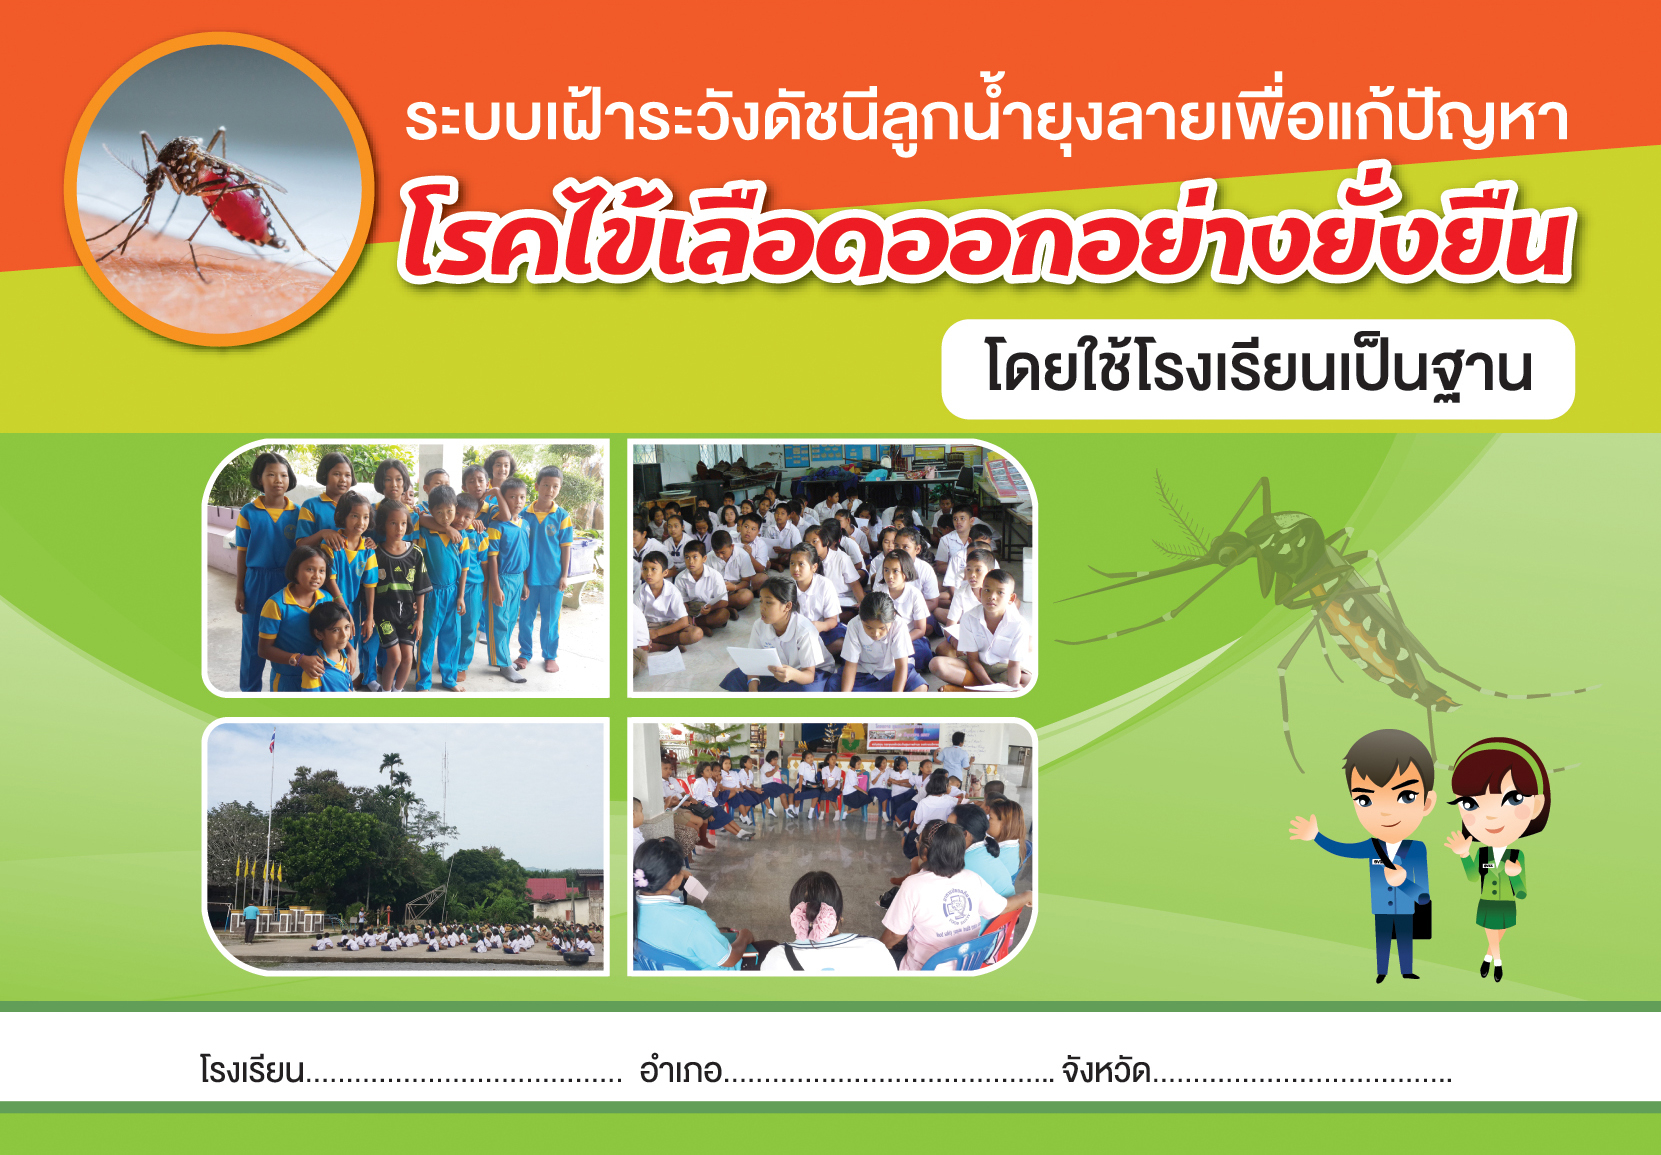 Dengue solution based on school